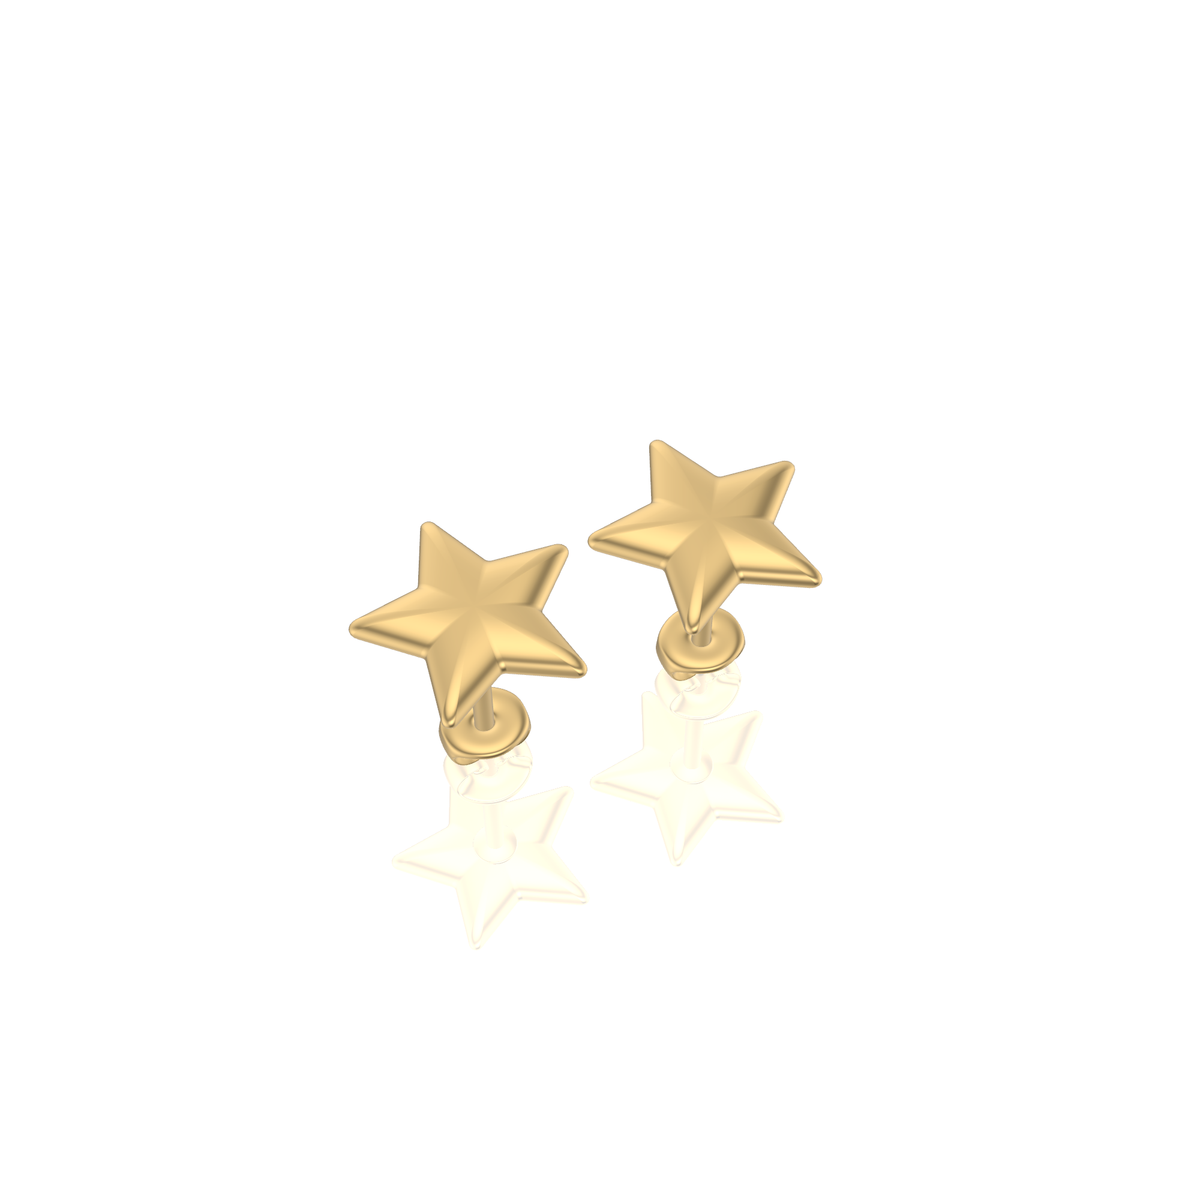 Little Star Earrings  | Gold Studs | Choose Your Metal